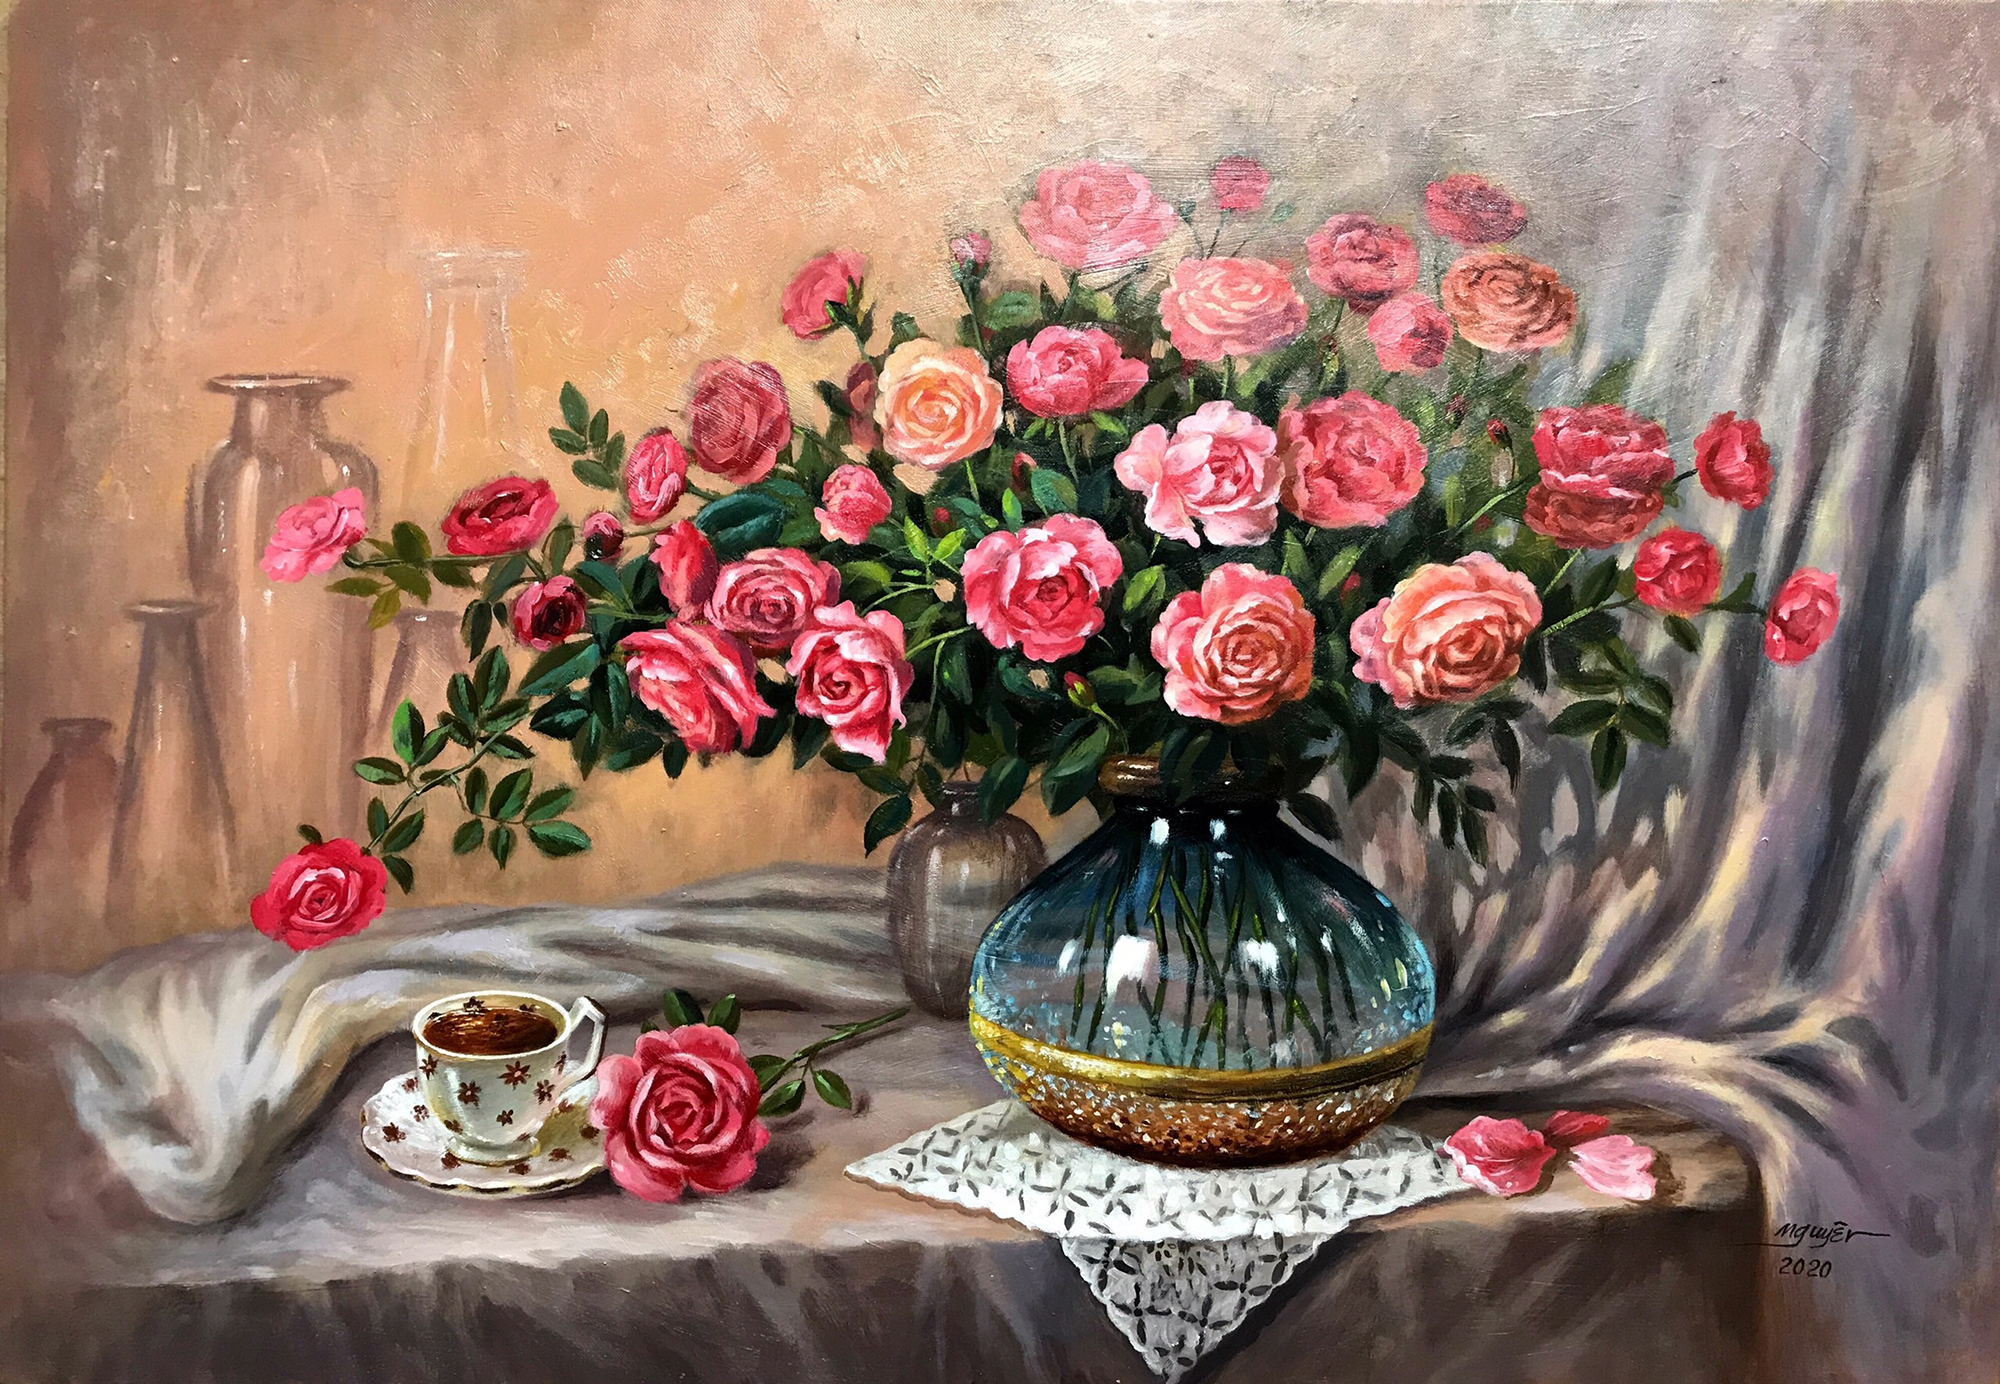 Tranh hoa sen hồng 3D  tranh phong thủy